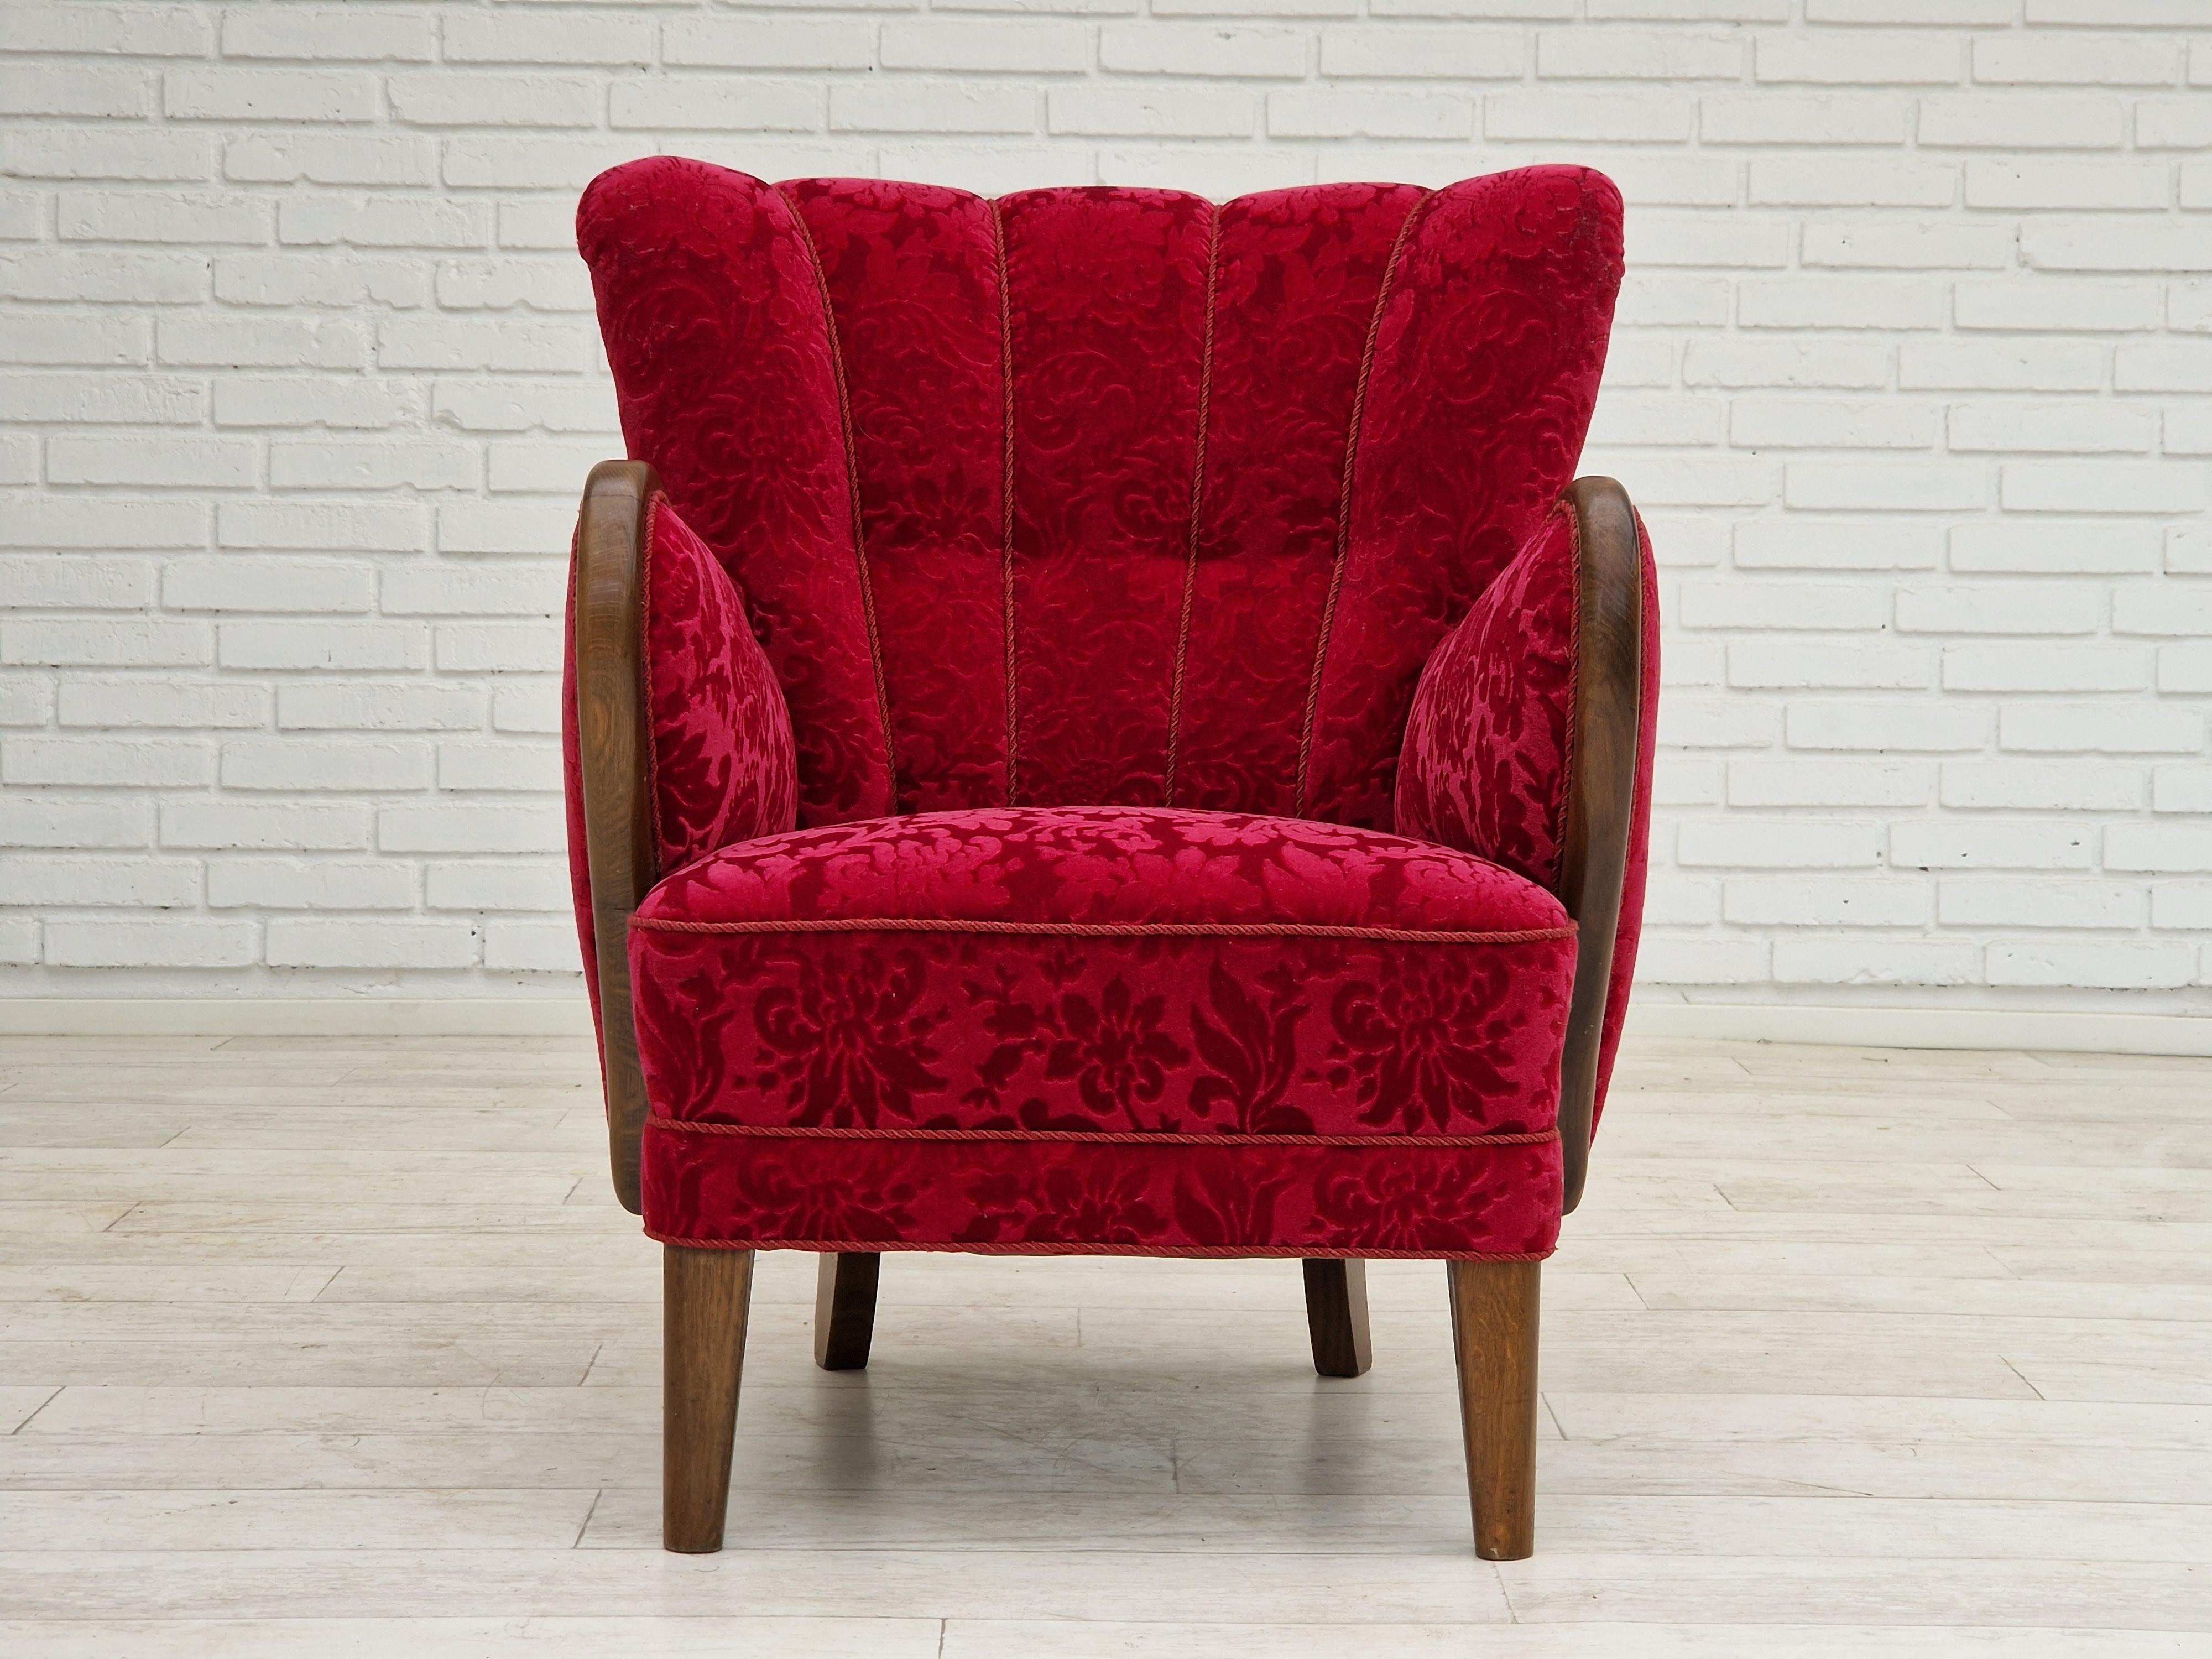 Scandinavian Modern 1960s, Danish design by Alfred Christensen, armchair in cherry red fabric. For Sale